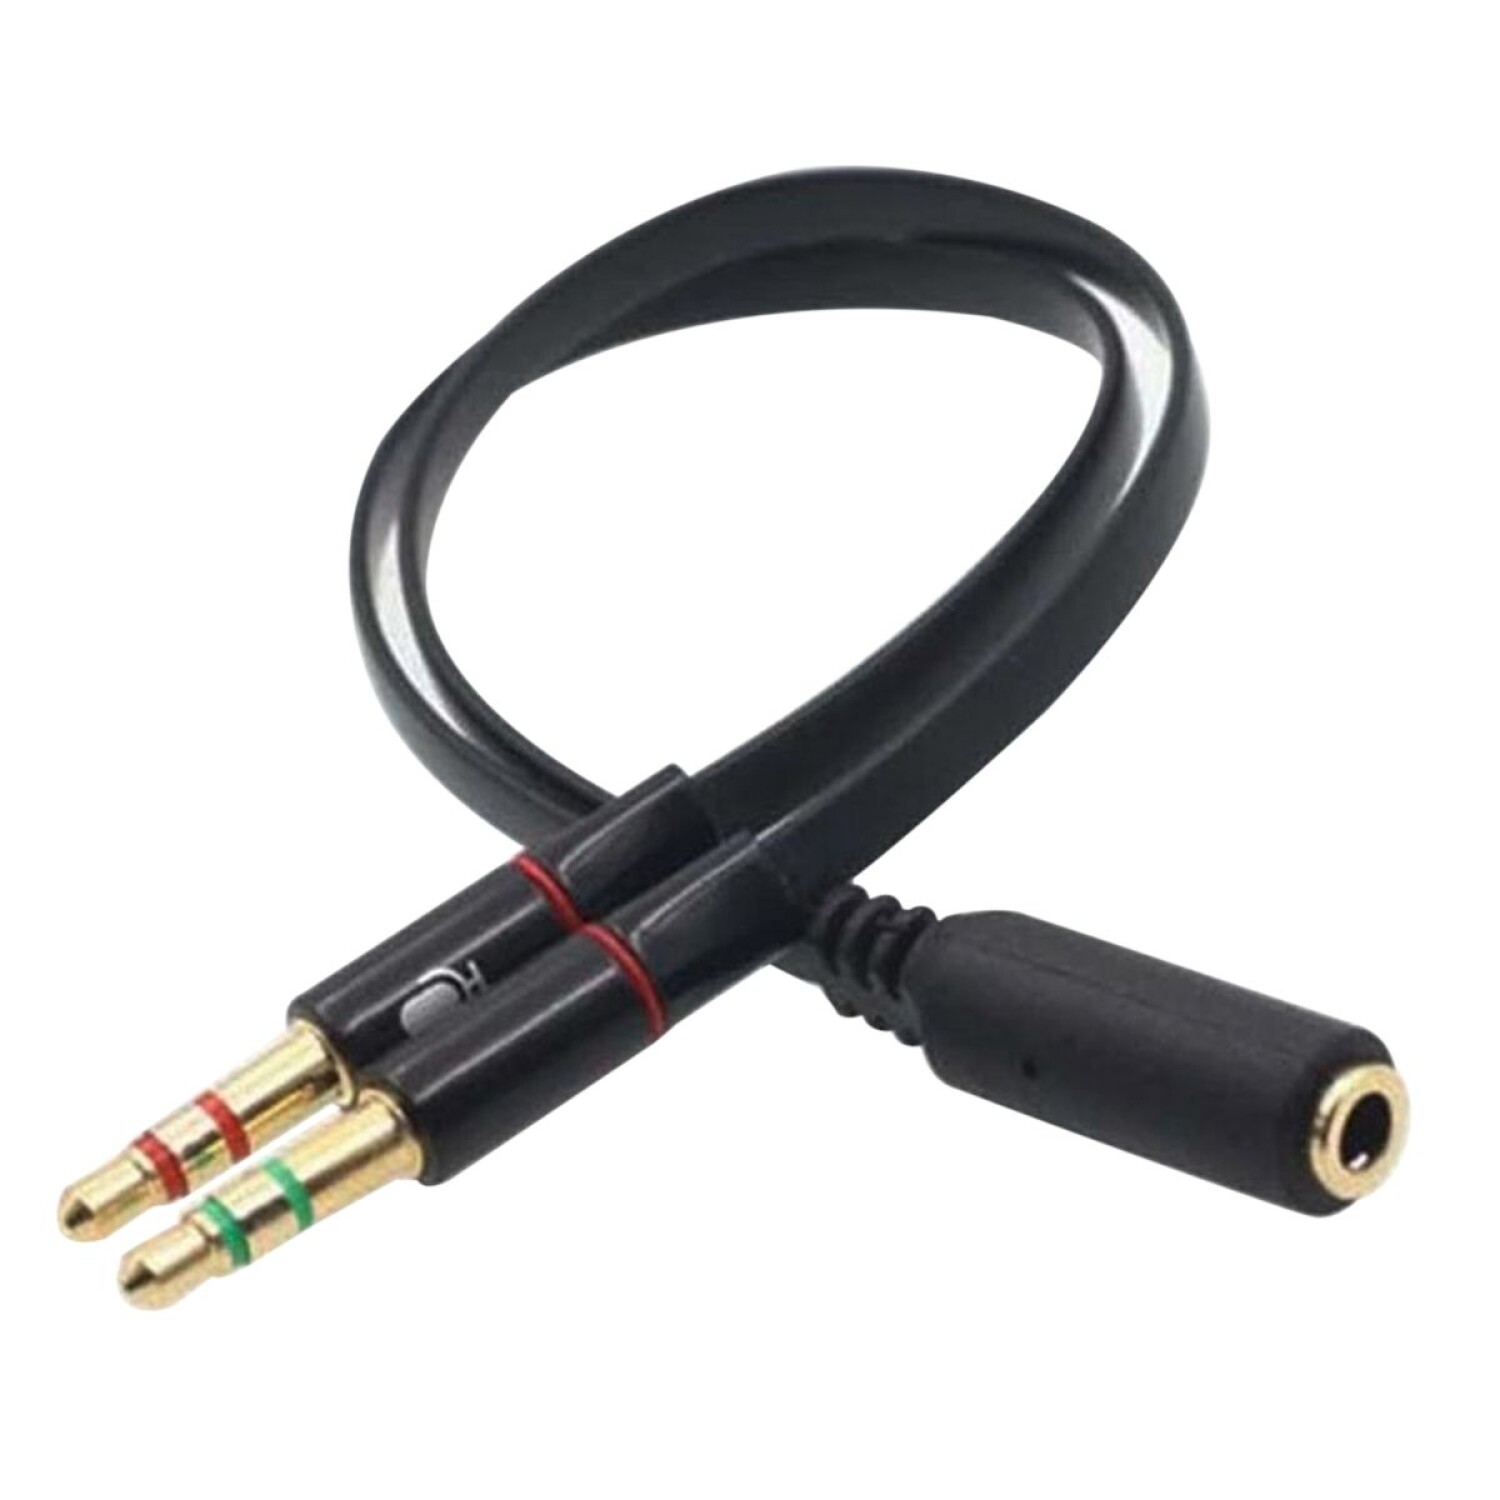 Cable adaptador Jack 3.5mm para PC a auriculares — Electroventas